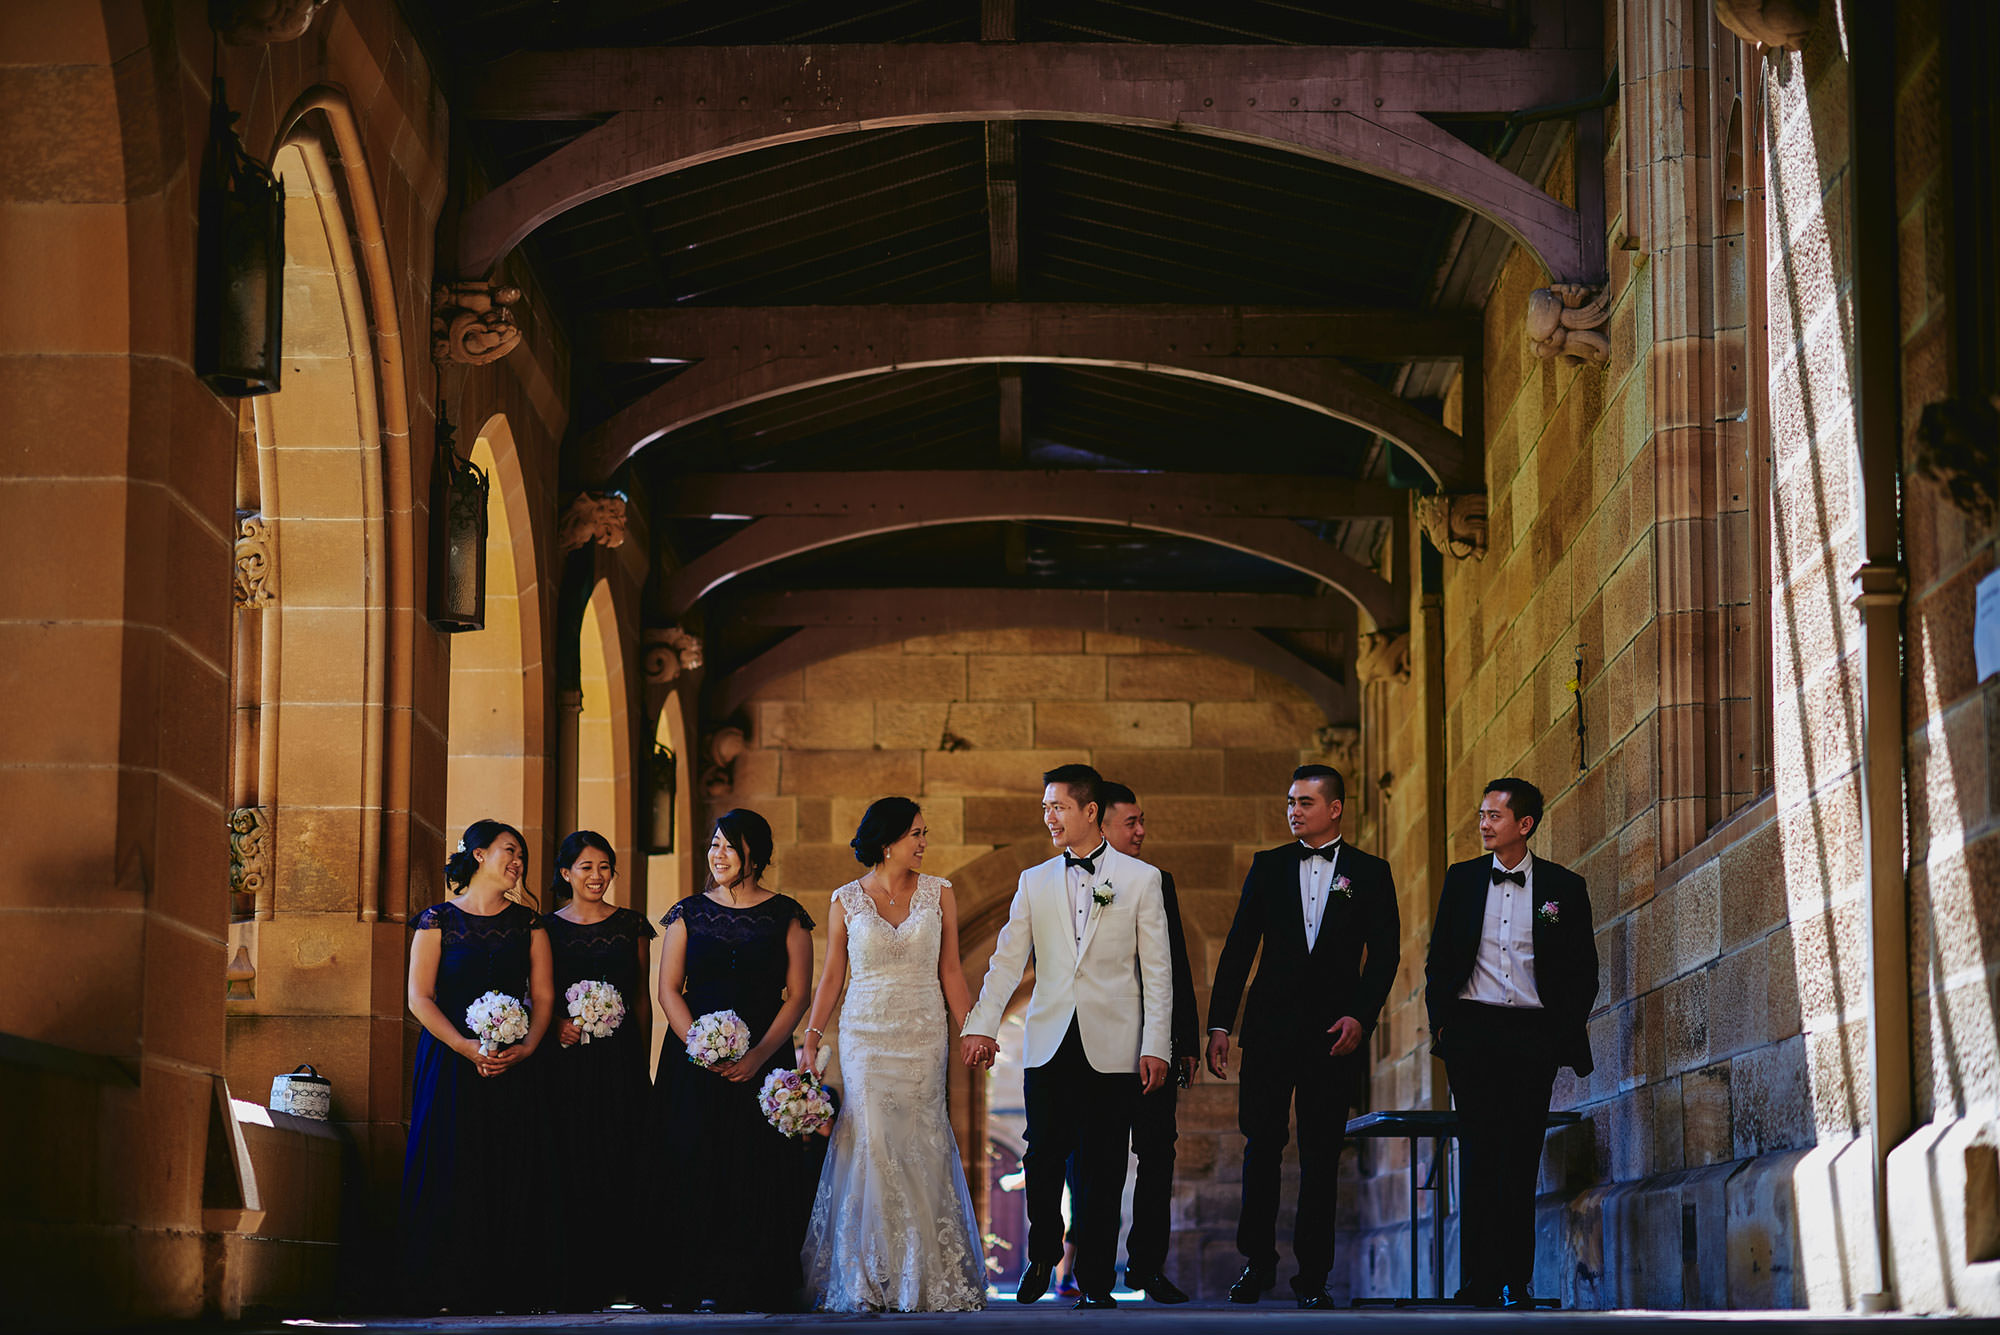 Sydney University wedding photos of Vu and Vivian